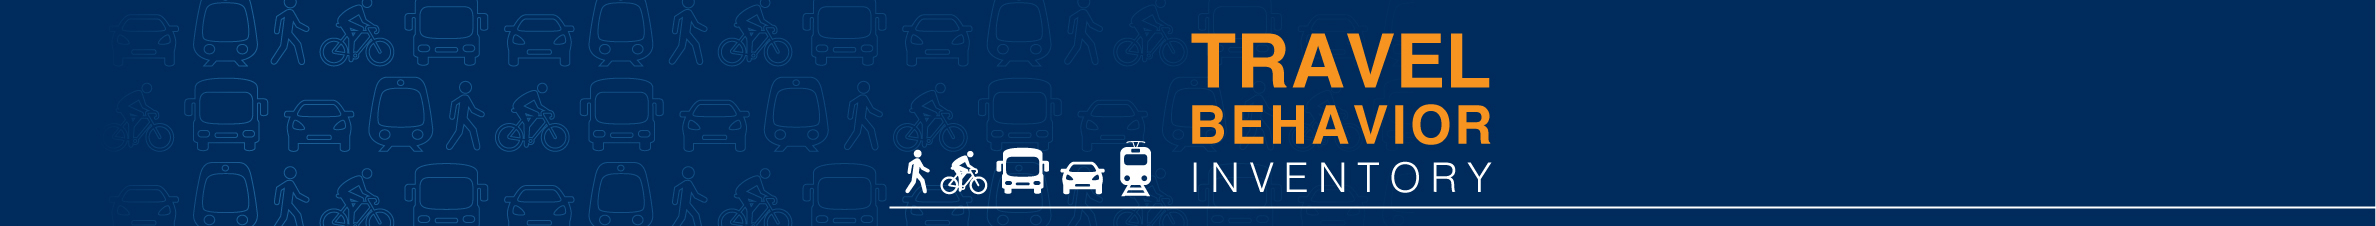 Travel Behavior Inventory banner